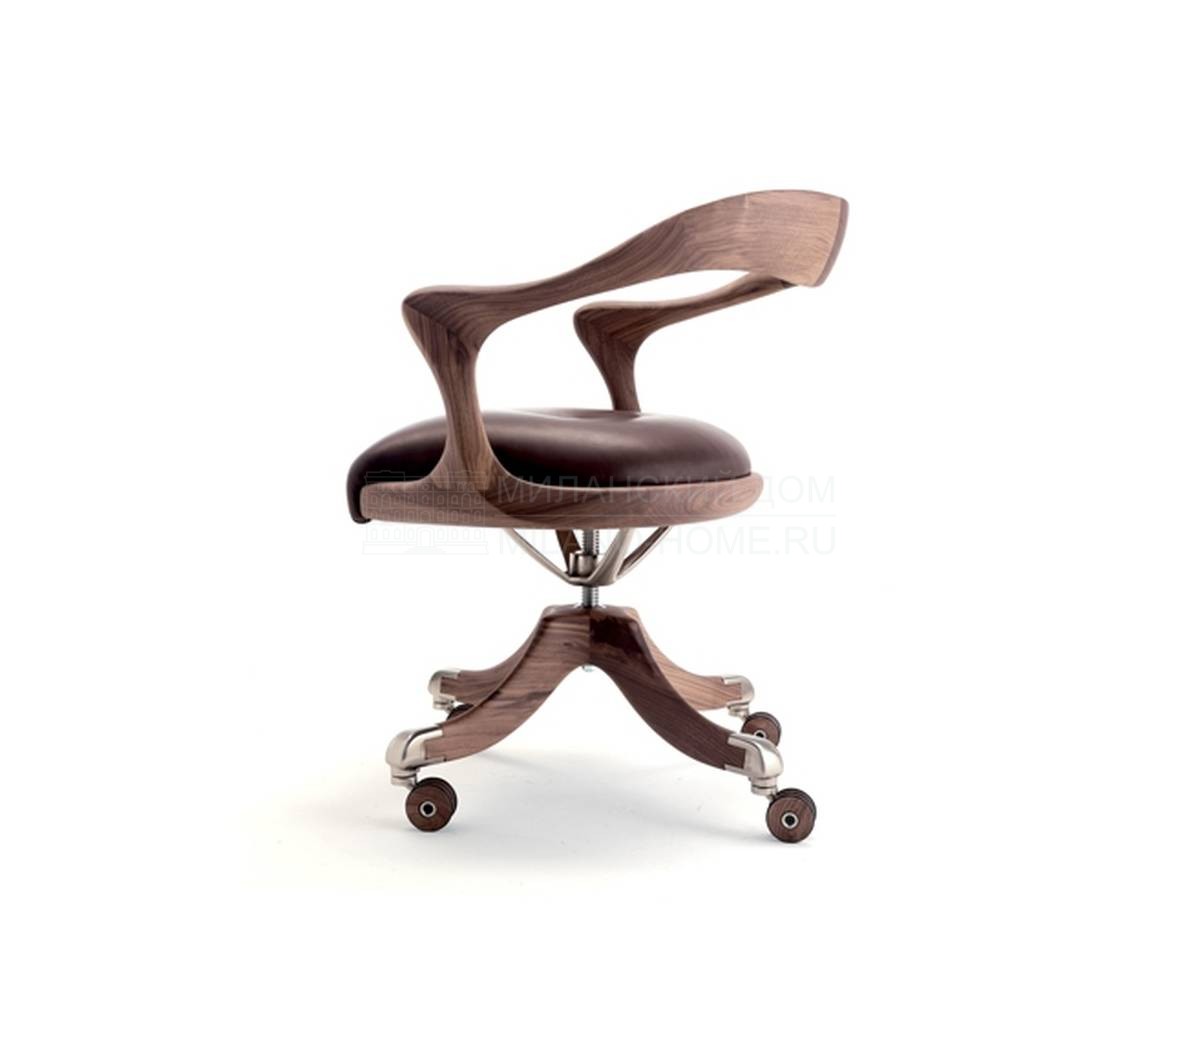 Рабочее кресло Marlowe / armchair из Италии фабрики CECCOTTI